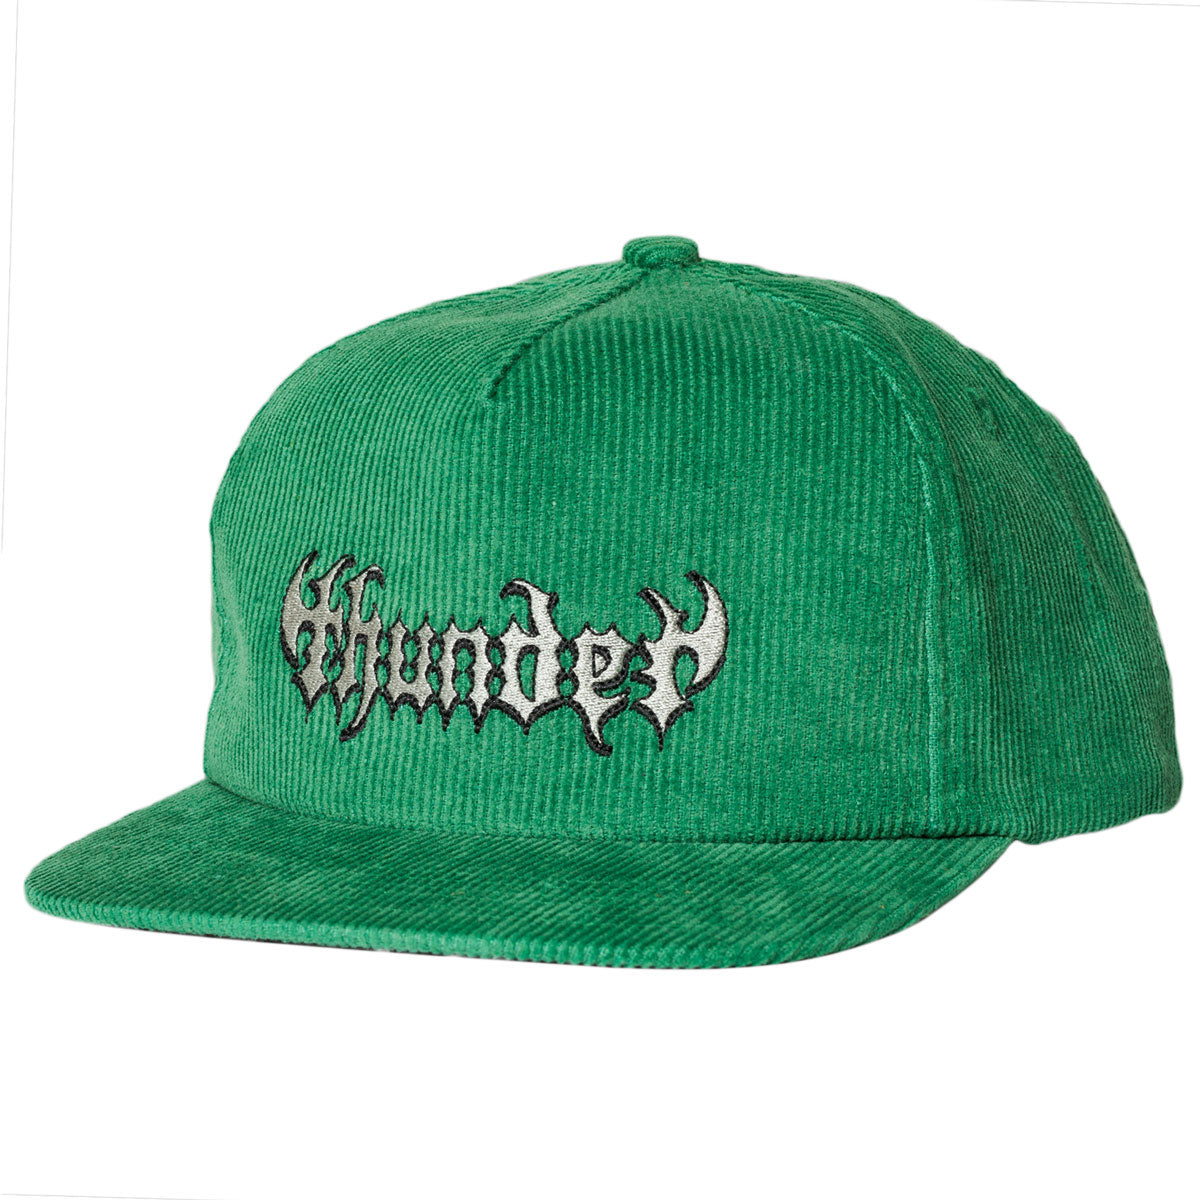 Thunder Catalyst Hat - Green image 1